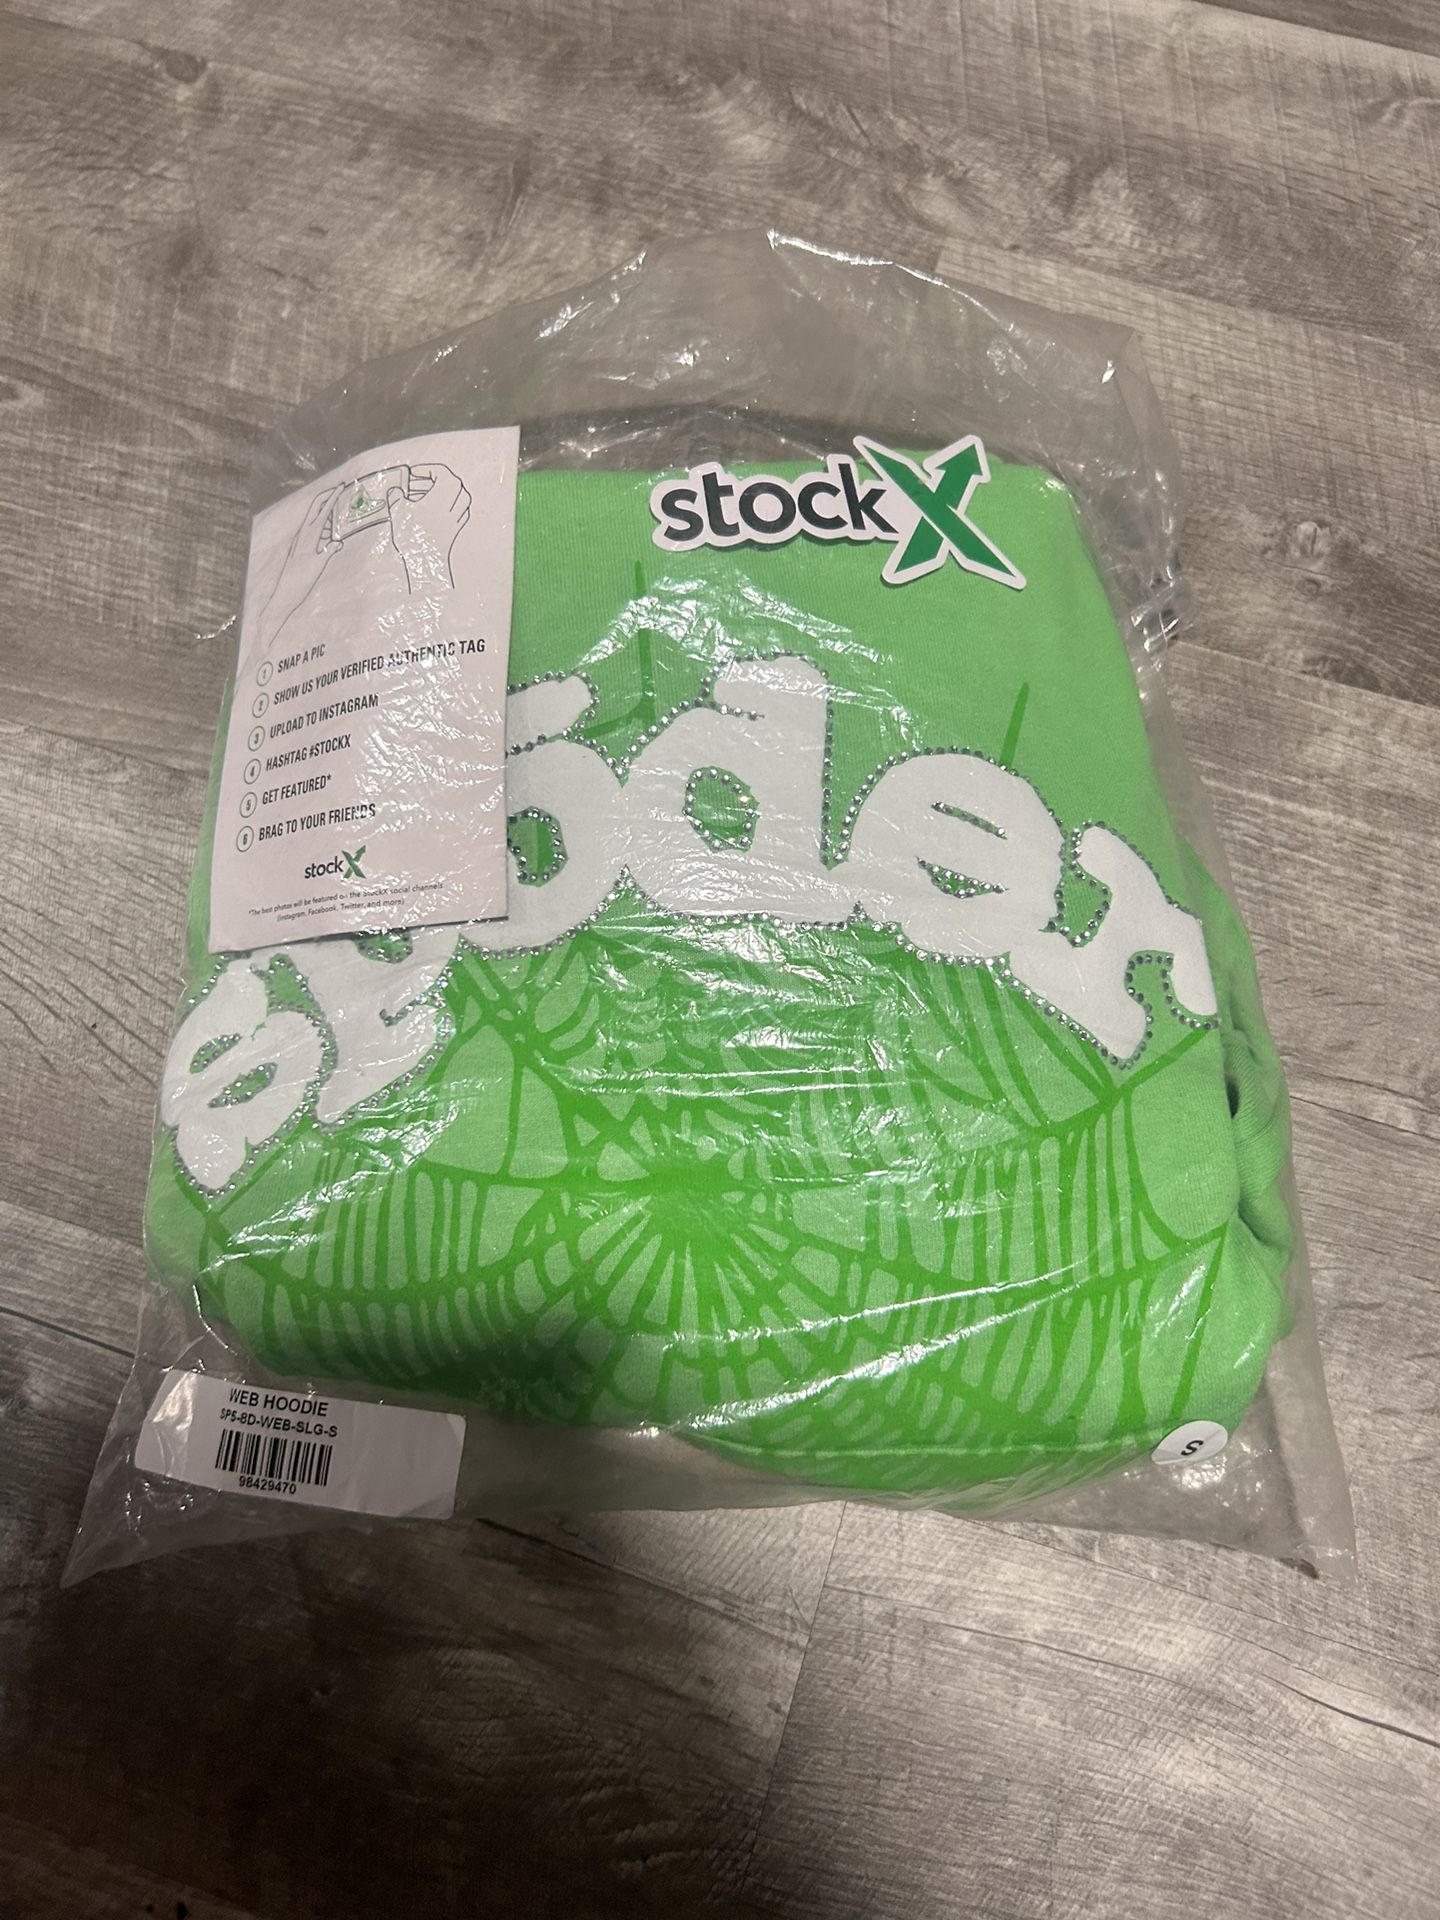  Sp5der hoodie”slime green”(stock x verified)